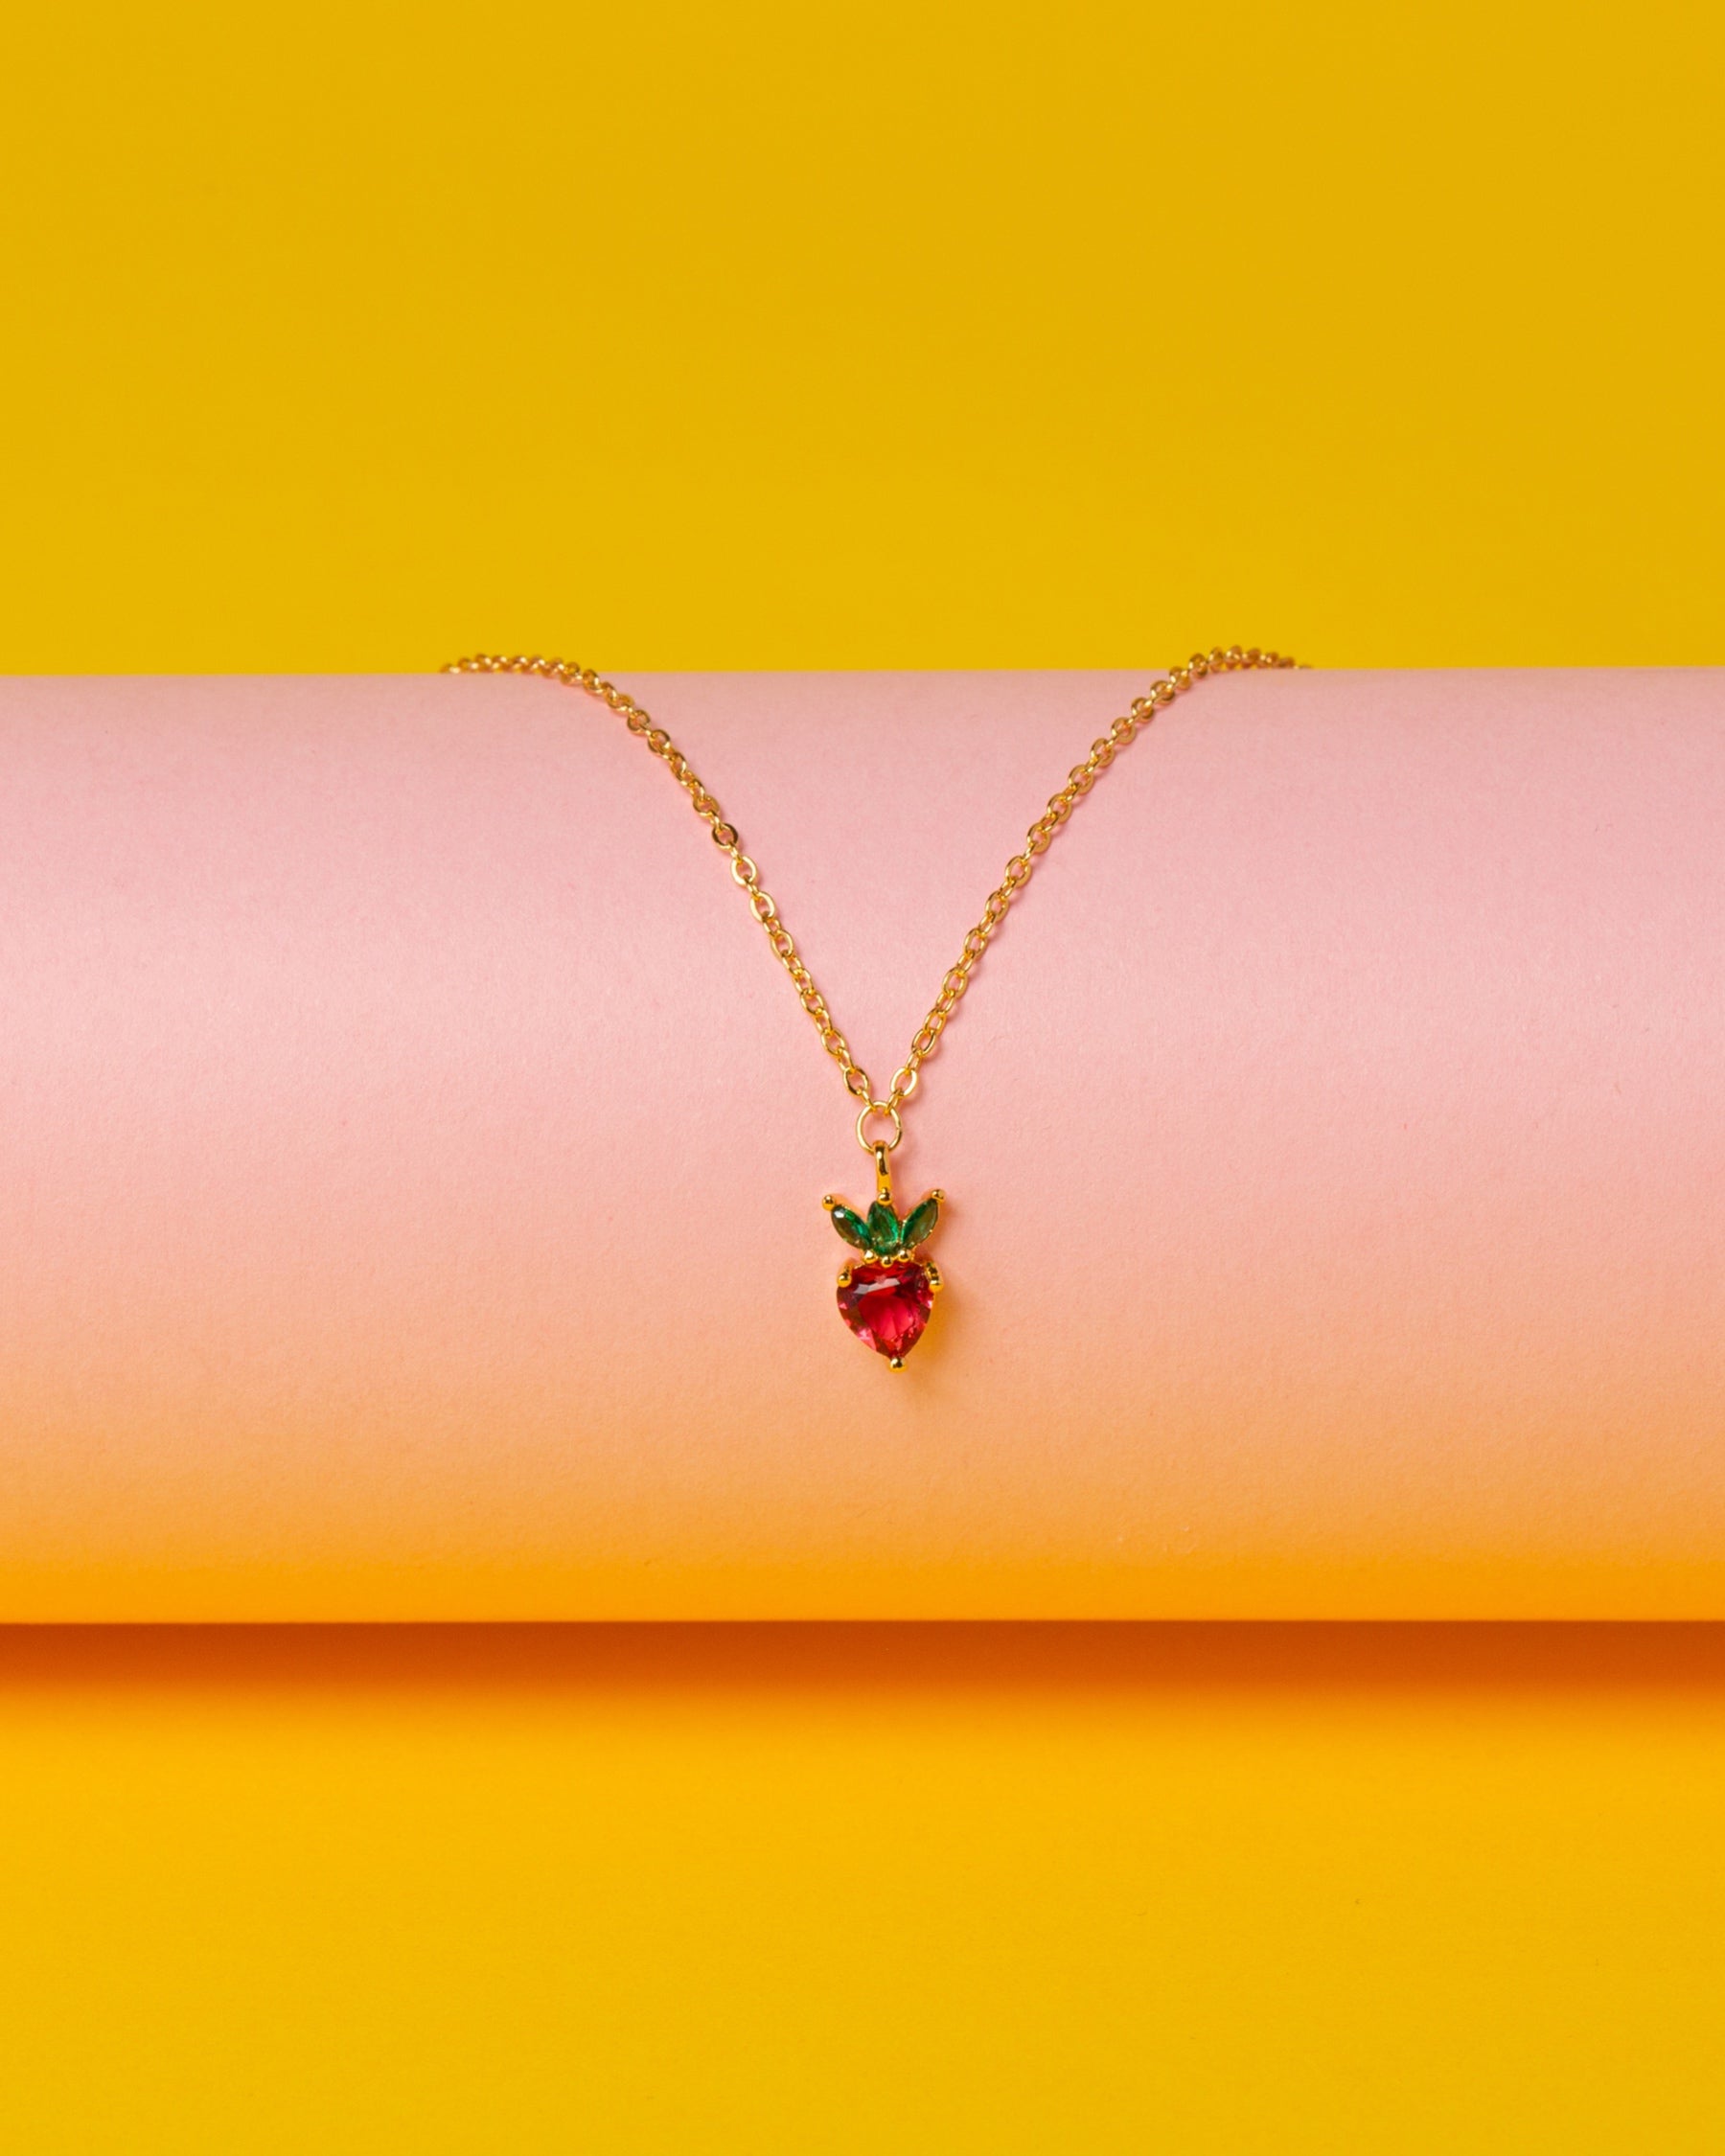 Strawberry pendant necklace